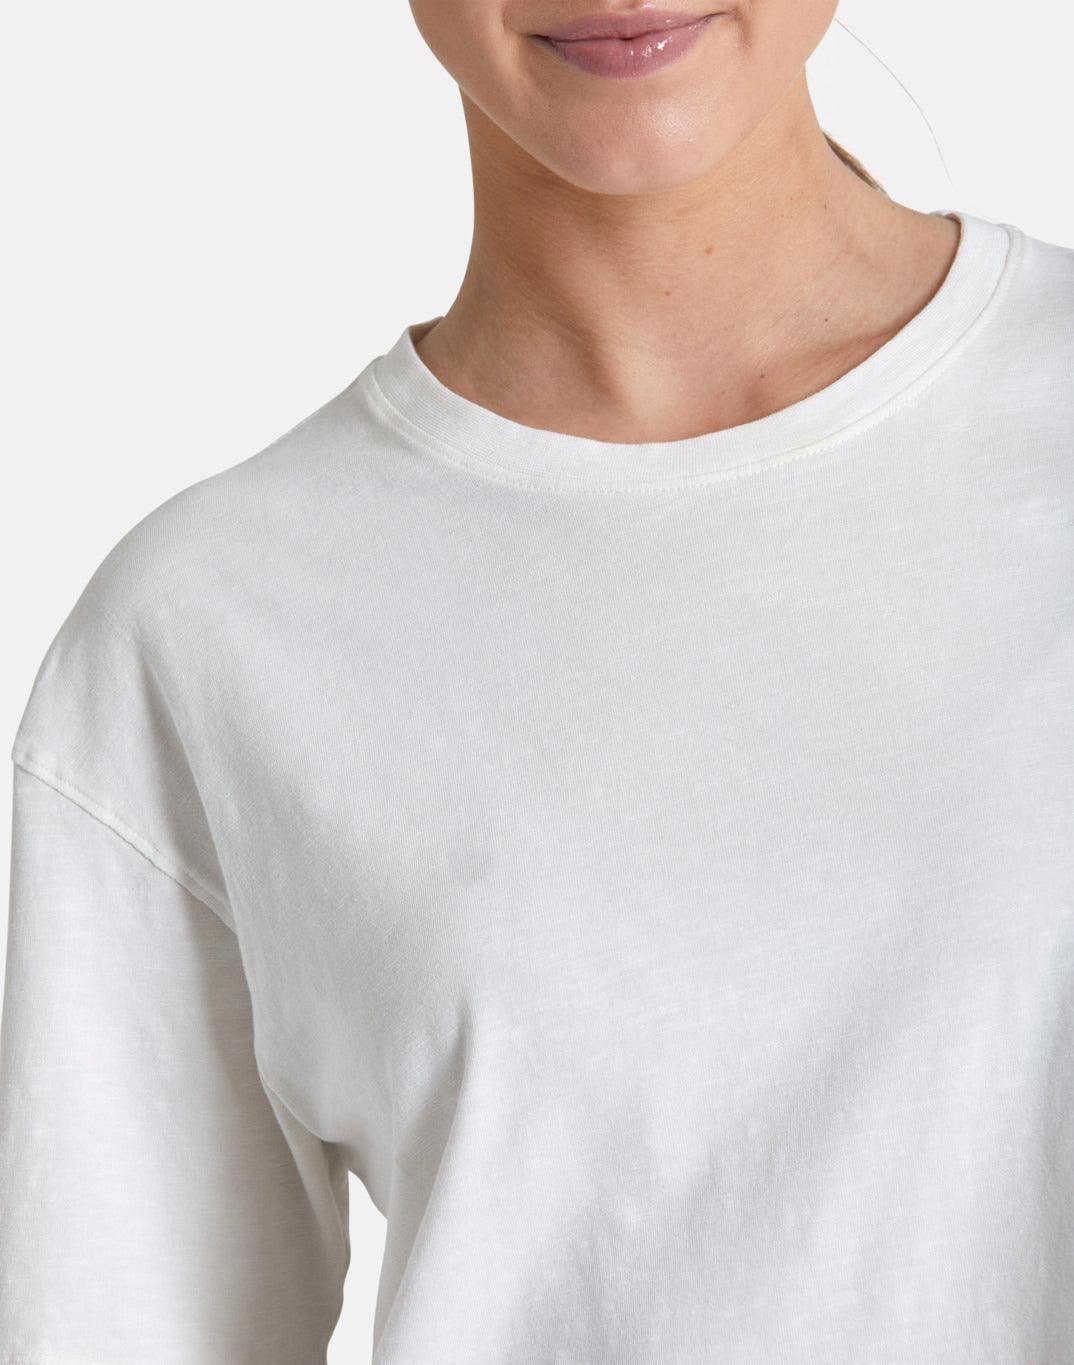 Boyfriend Crop Tee in Ivory White - T-Shirts - Windsorbauders IE